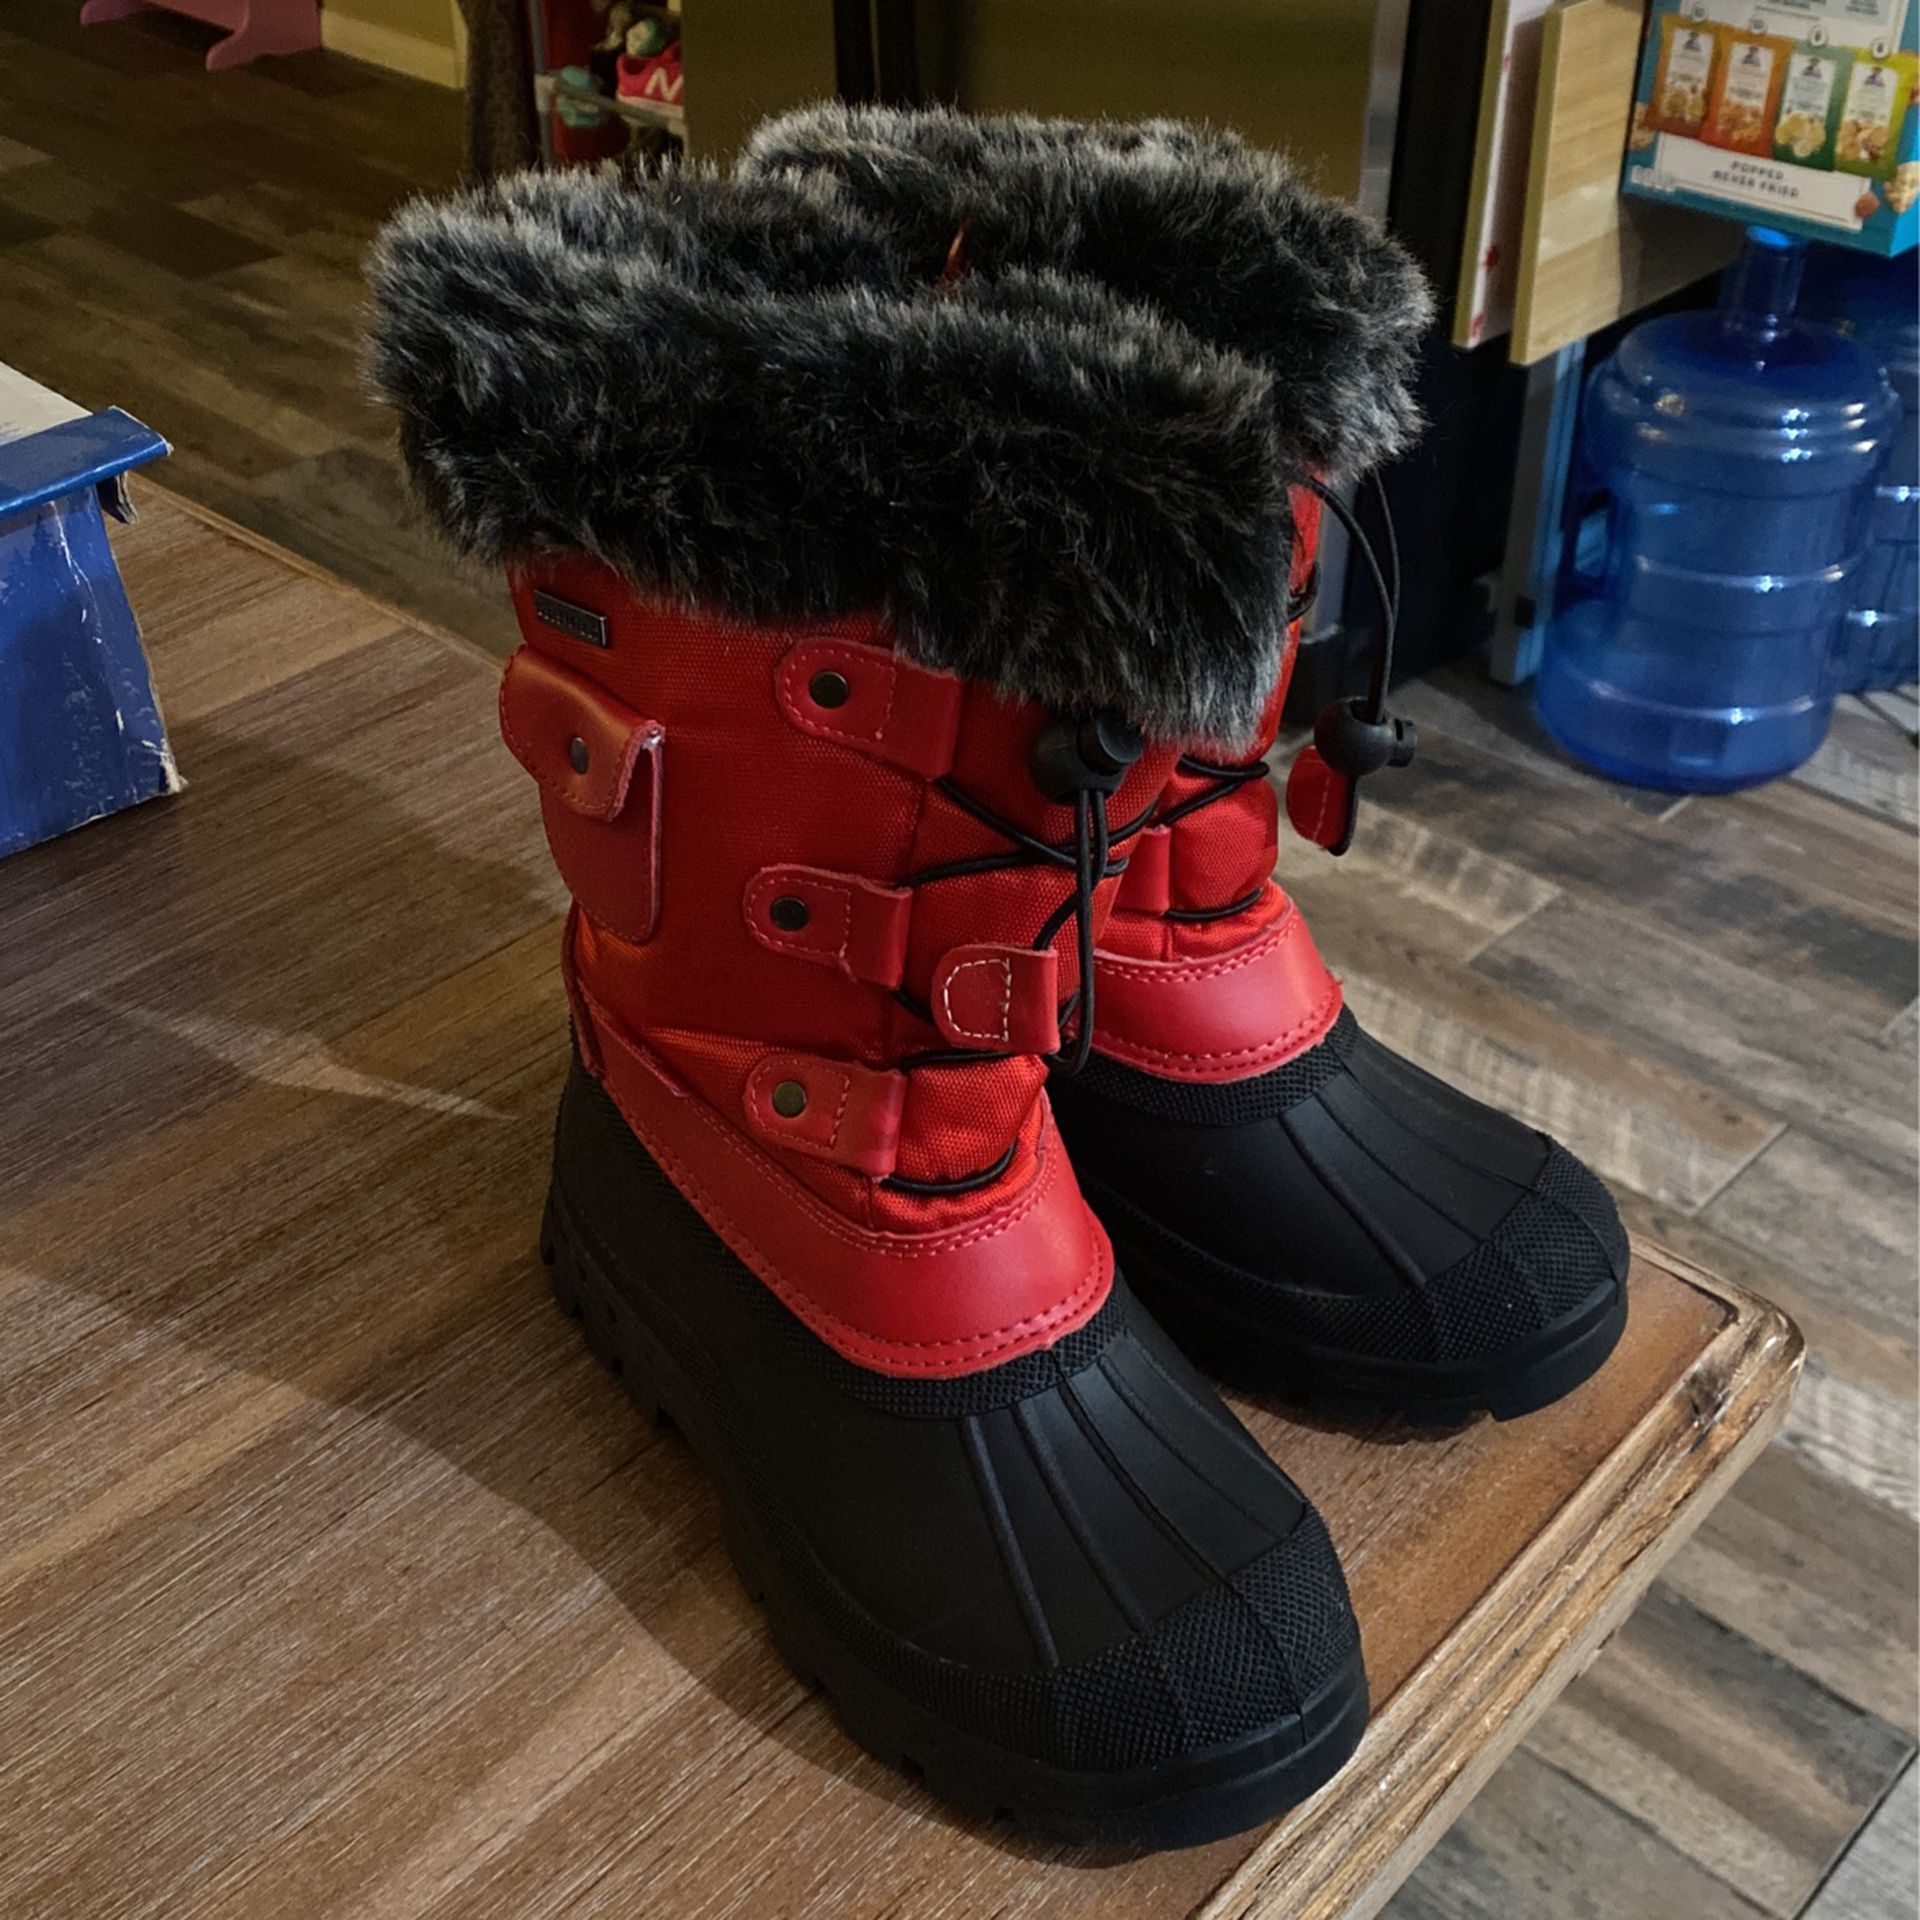 Kids Snow Boots Size 1 